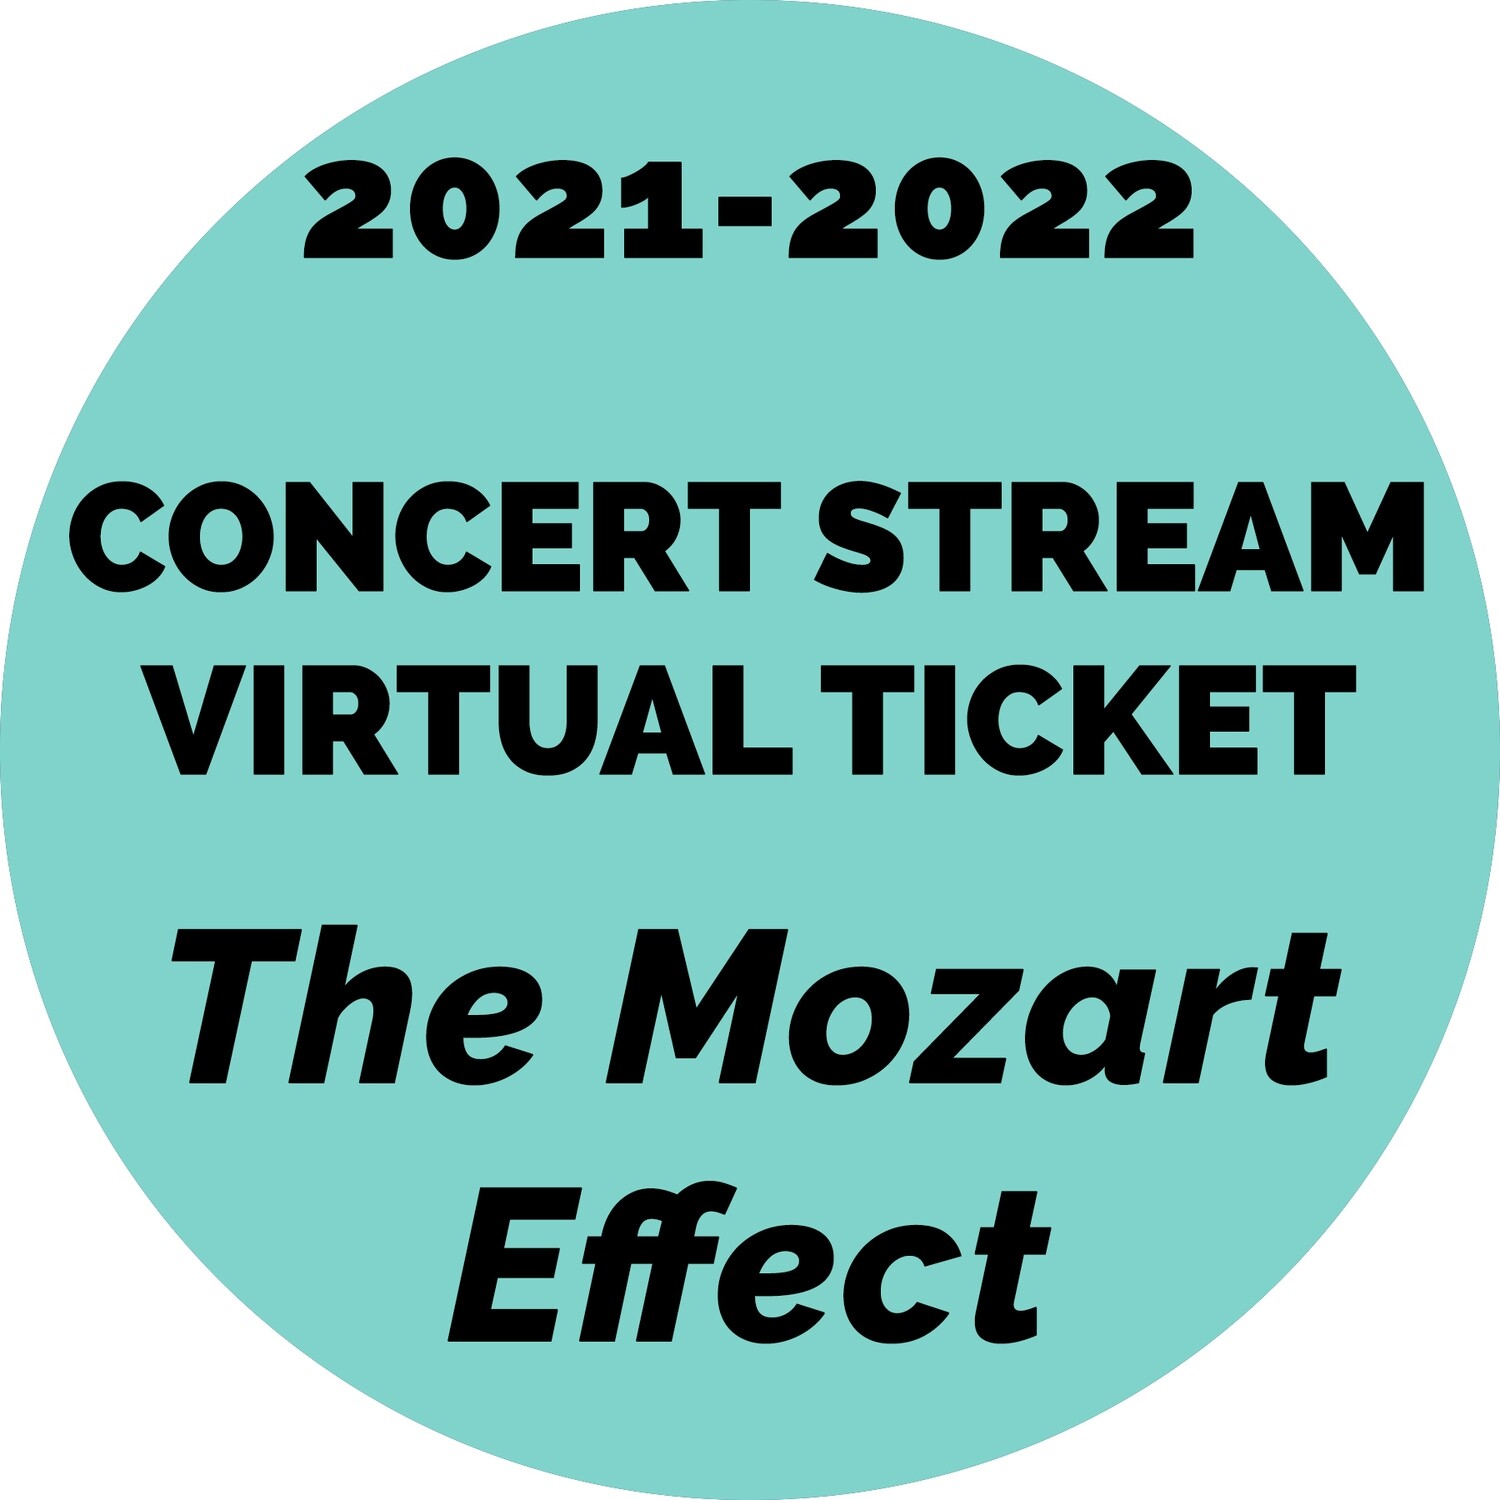 The Mozart Effect Concert Stream Virtual Ticket